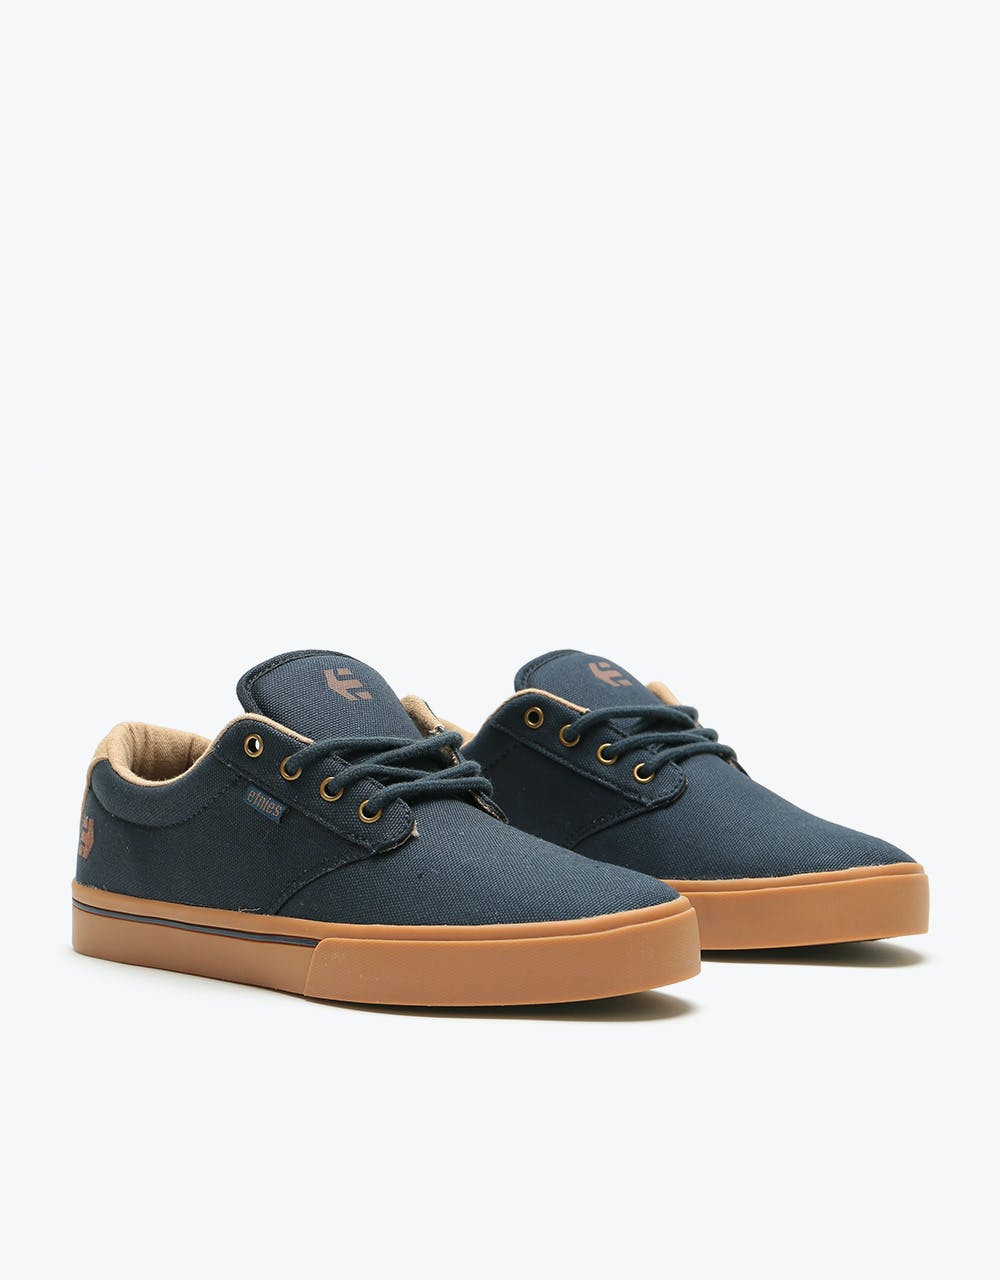 Etnies Jameson 2 Eco Skate Shoes - Navy/Gum/Gold